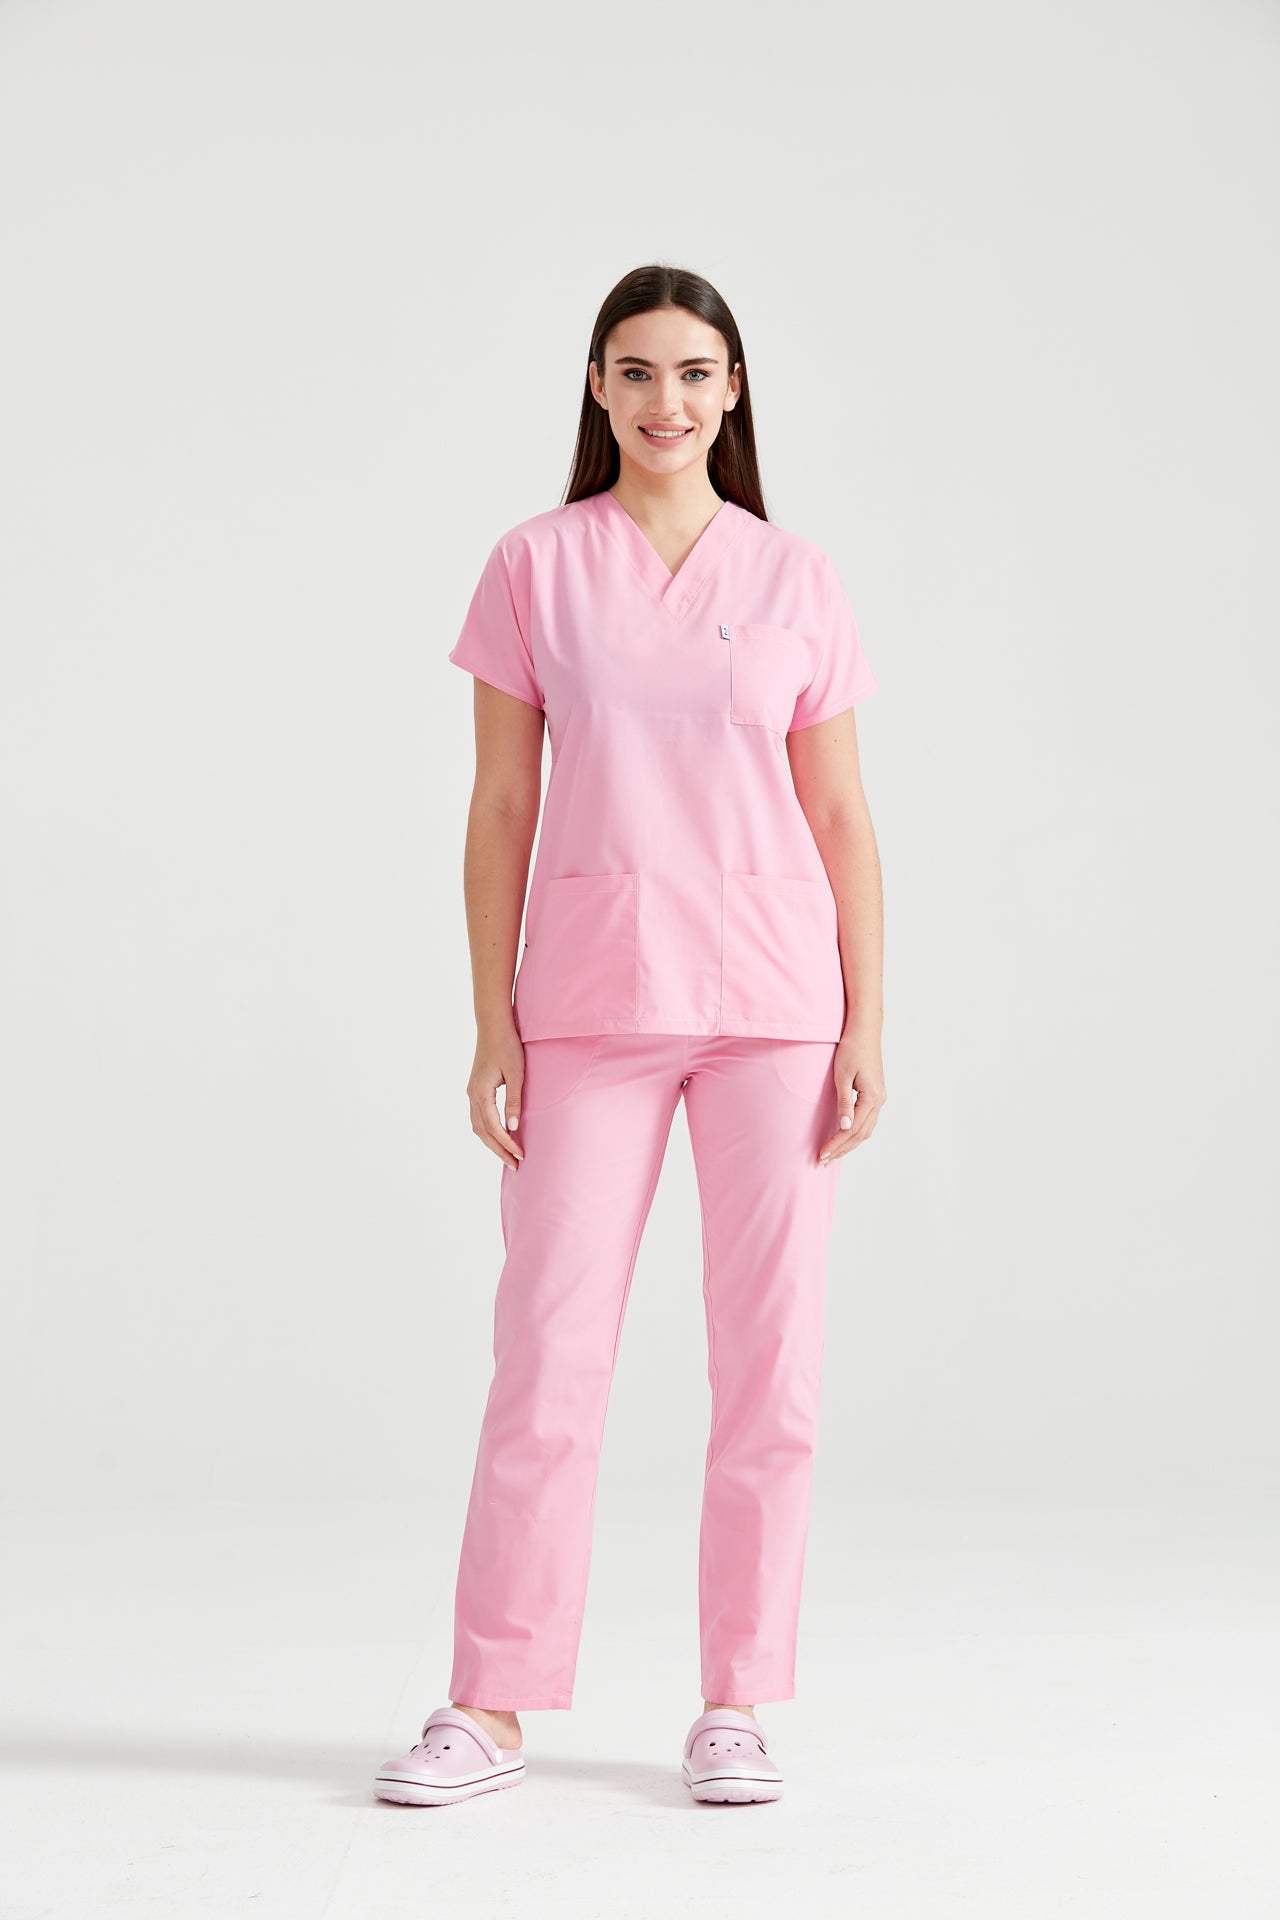 Asistenta medicala imbracata in costum roz Baby Pink, vedere din picioare